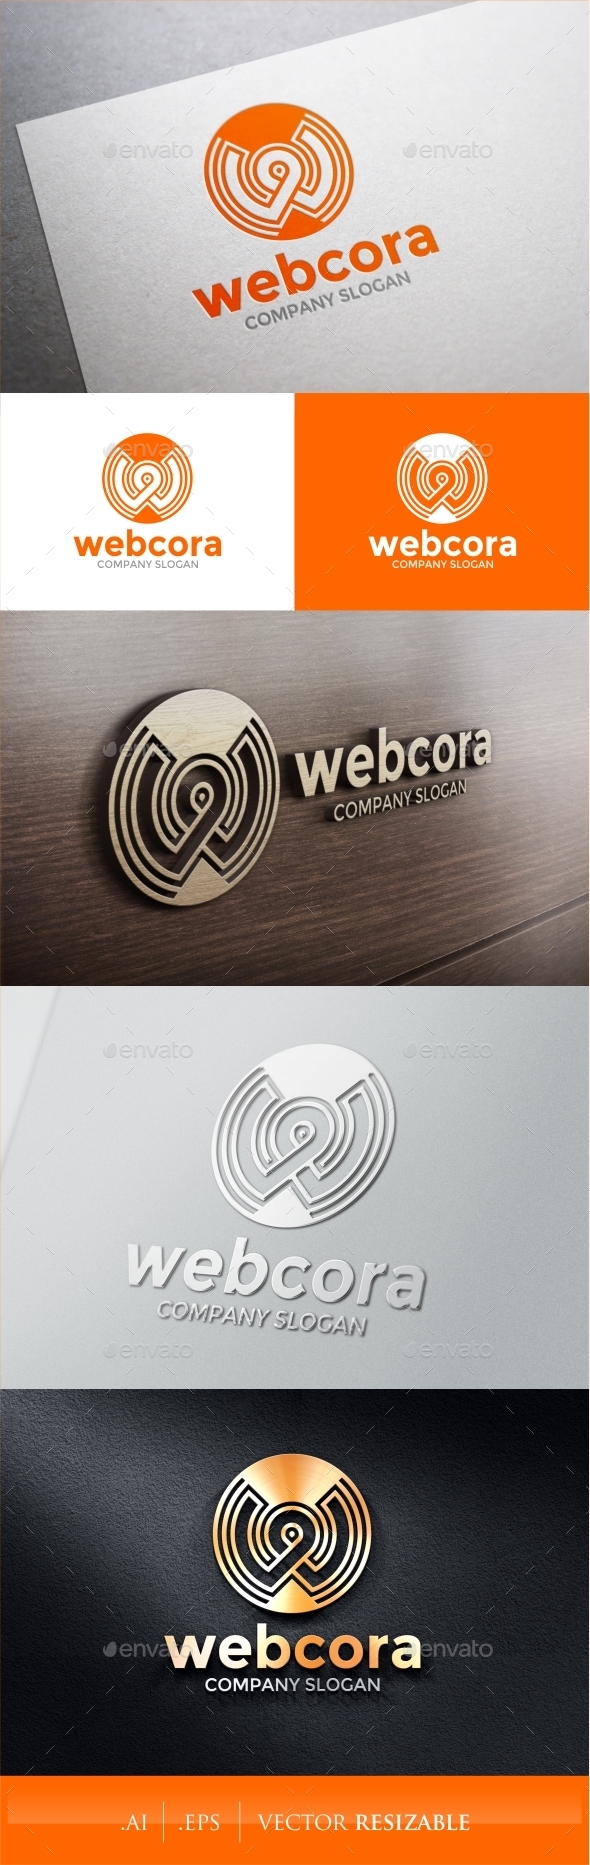 W Letter Logo